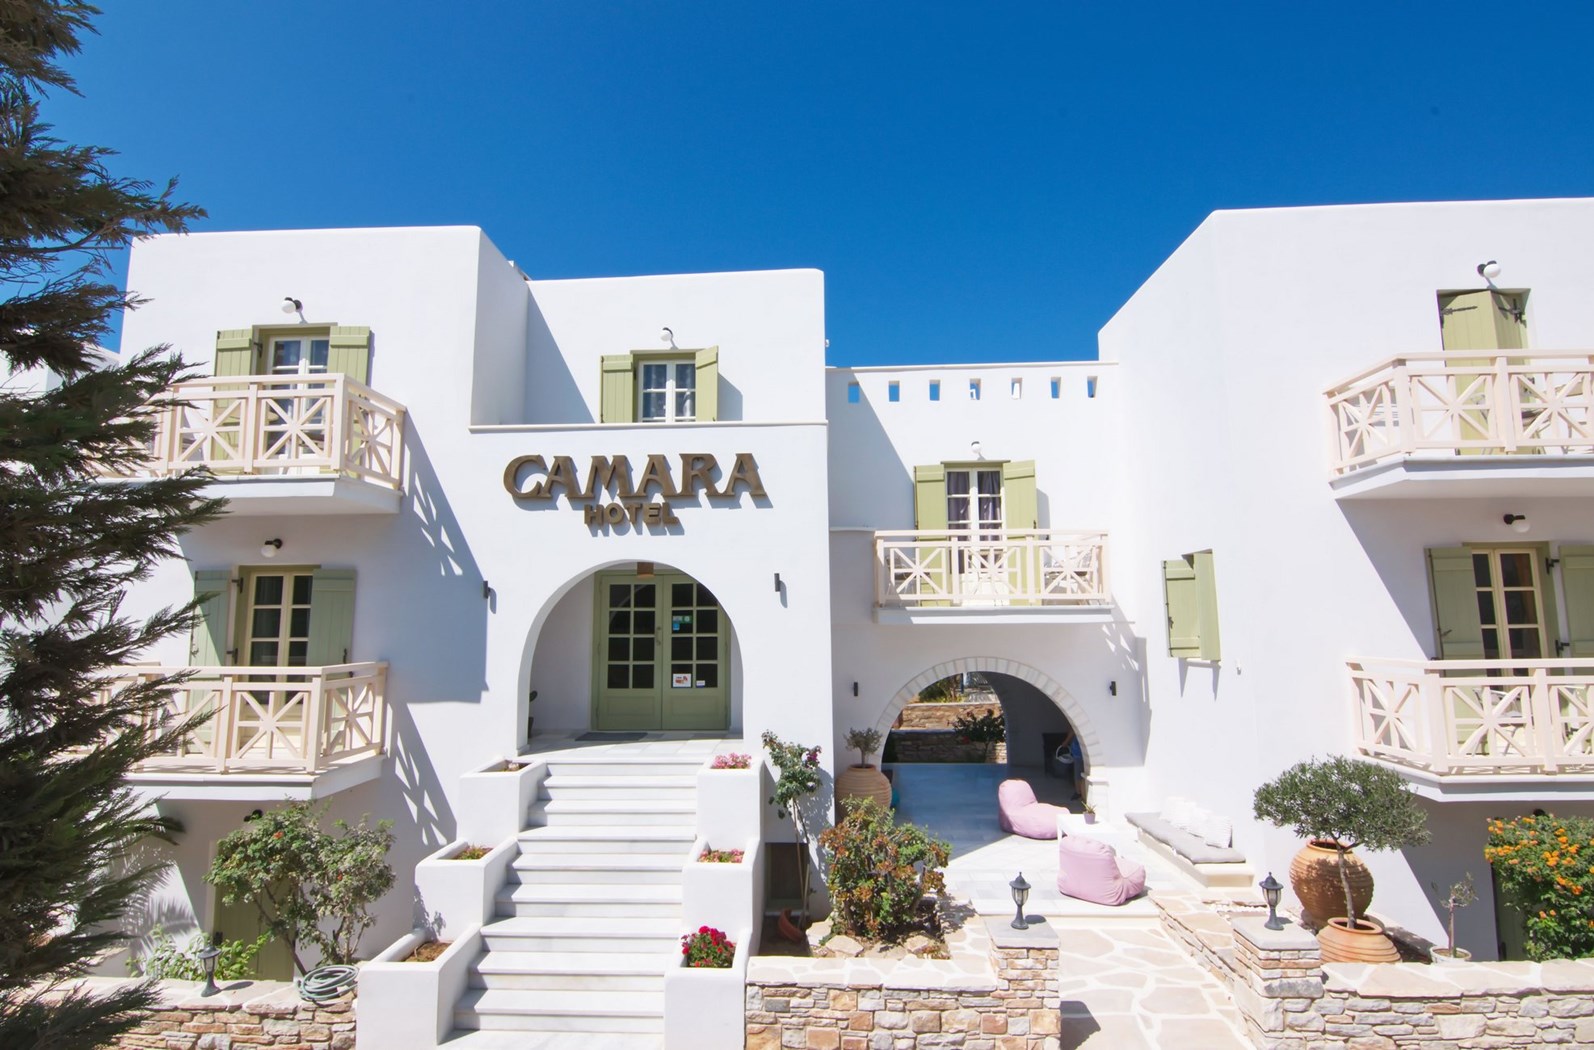 Camara Hotel - Άγιος Προκόπιος, Νάξος ✦ -29% ✦ 2 Ημέρες